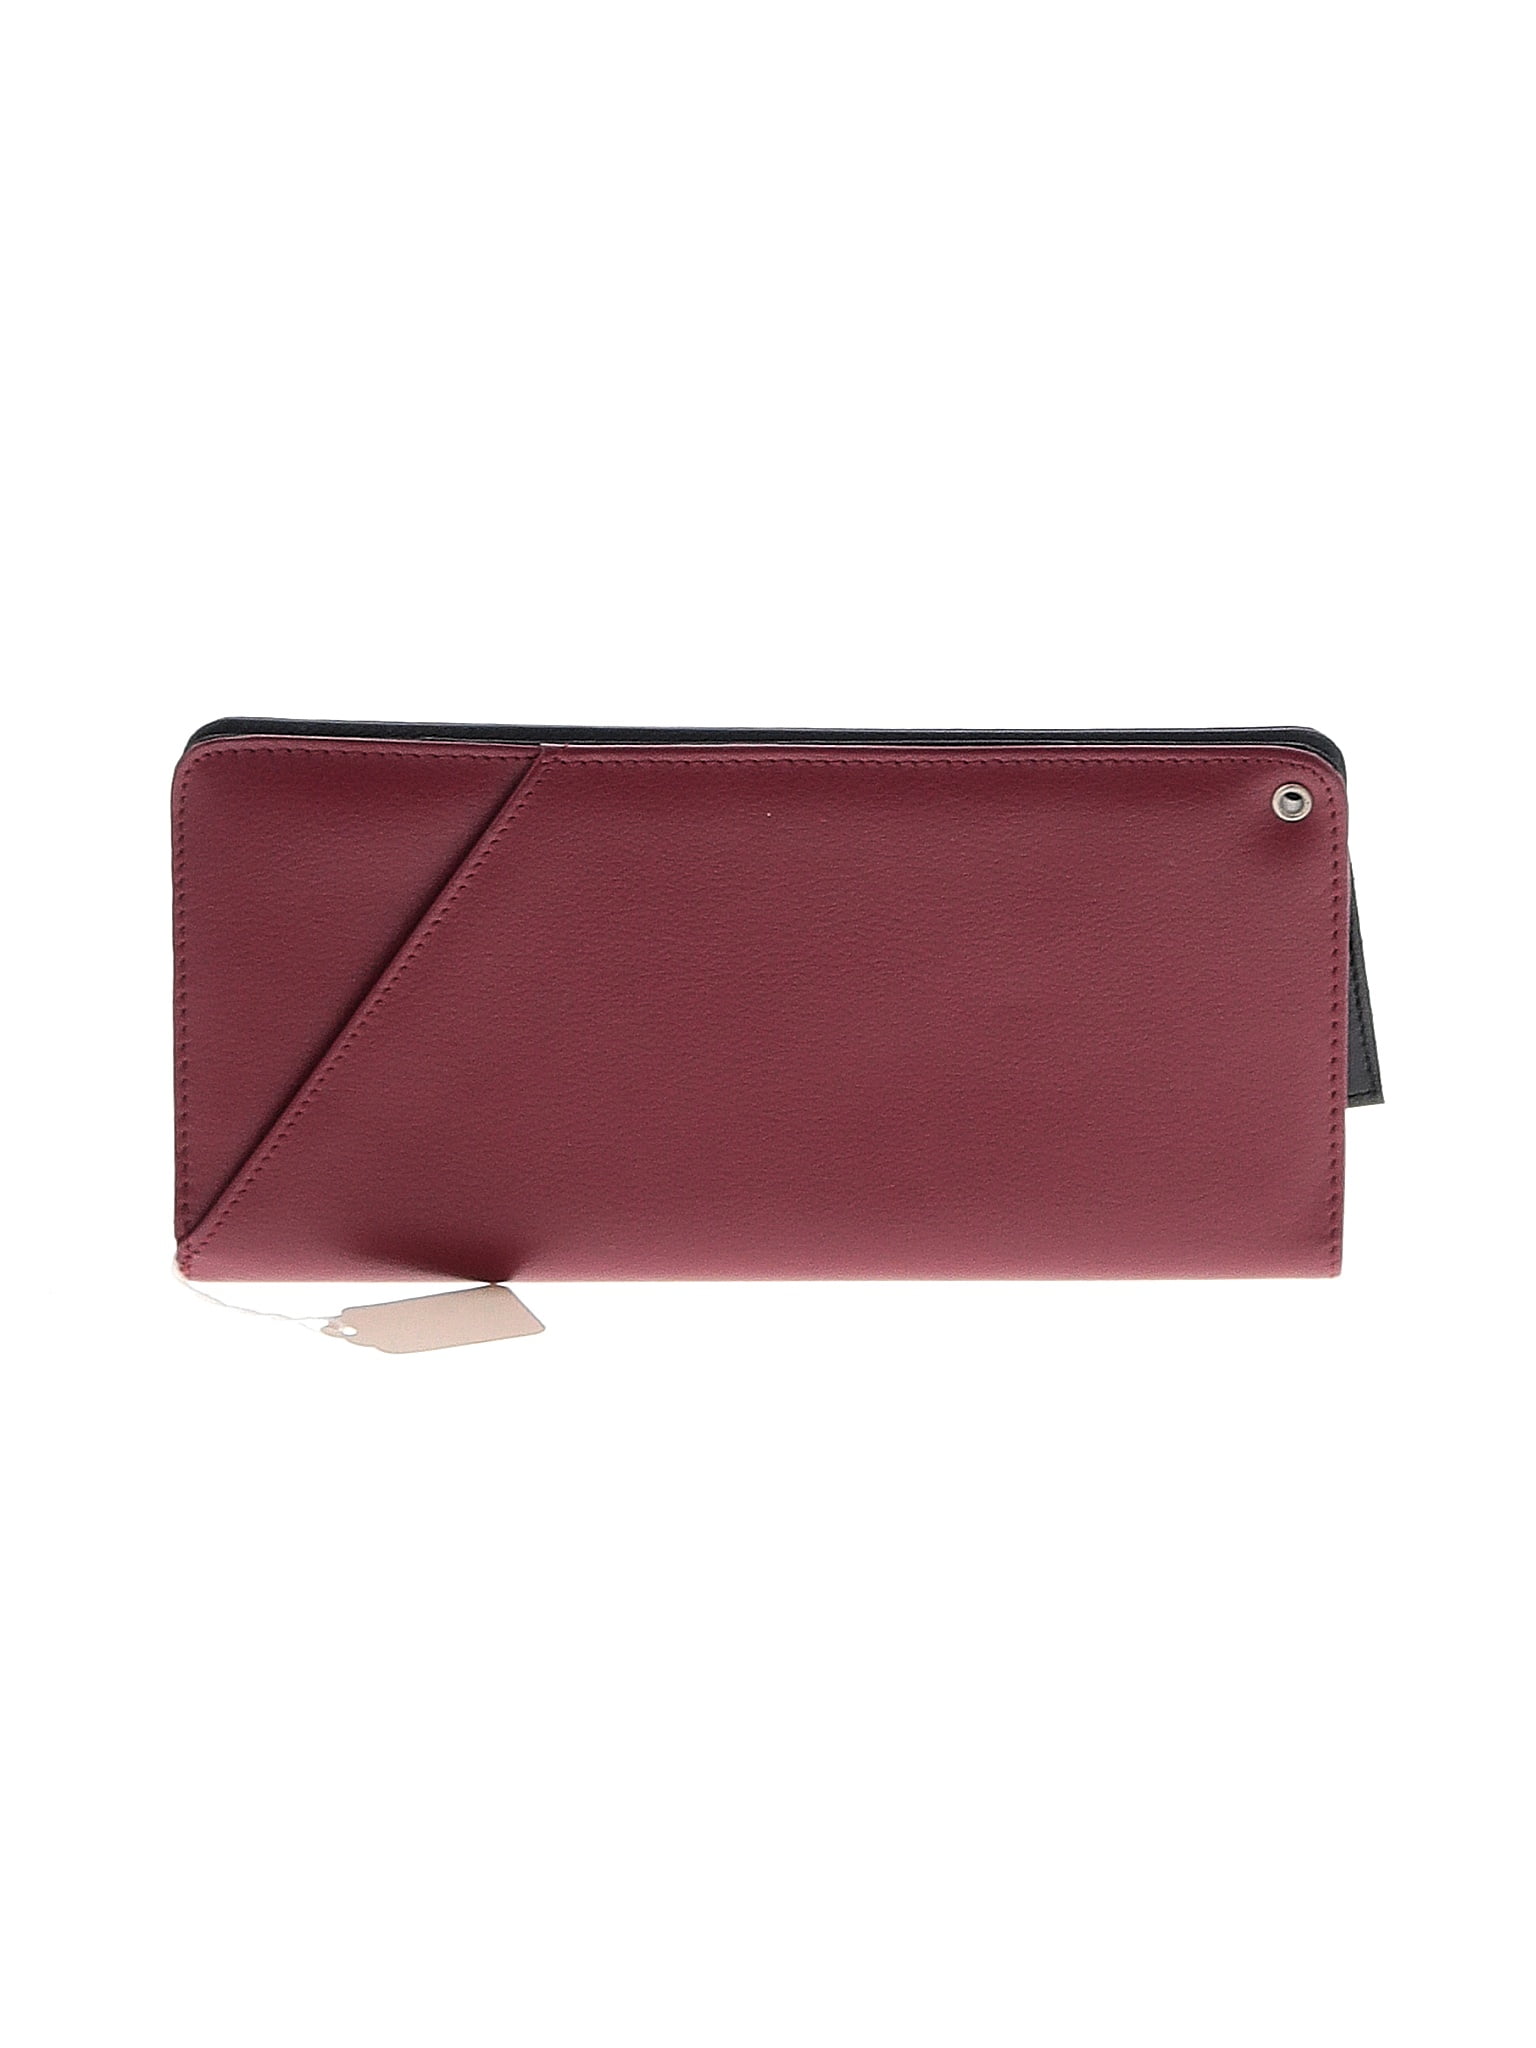 FRANKLIN COVEY Leather Lite Brown Shoulder Bag Purse W/ Wallet 12x9x2 Hobo